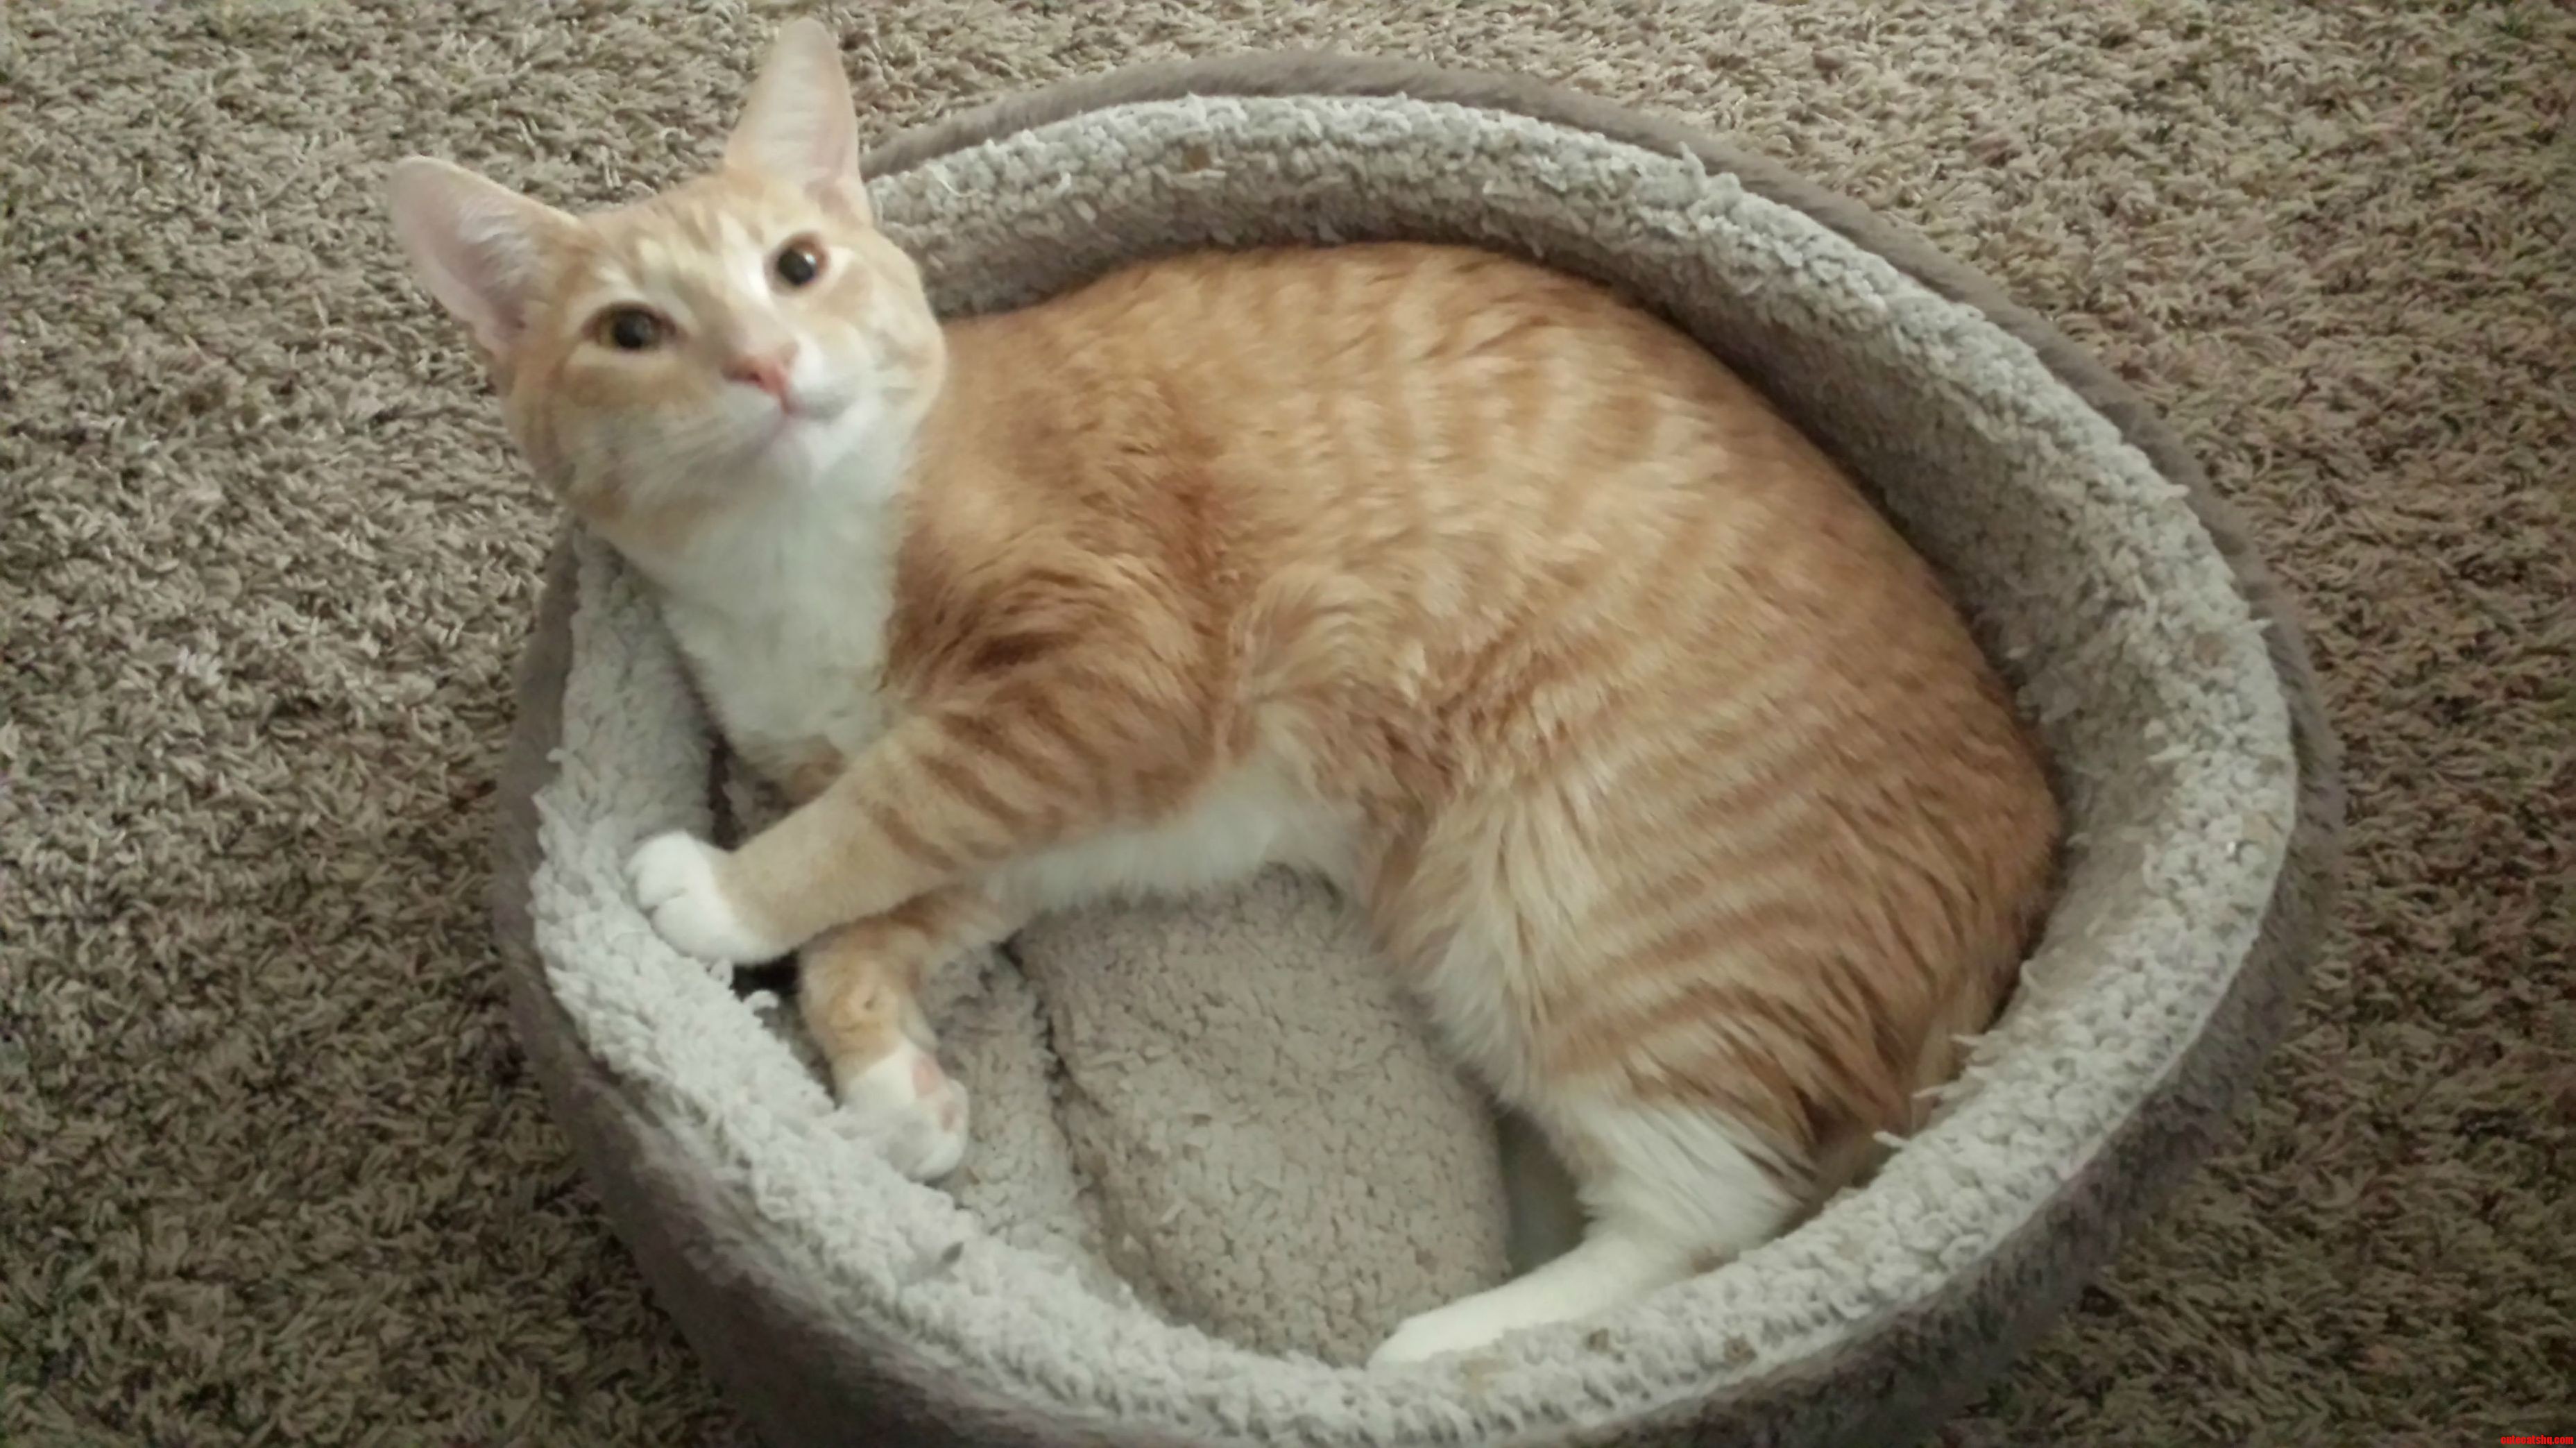 Pixels finally using his cat bed.